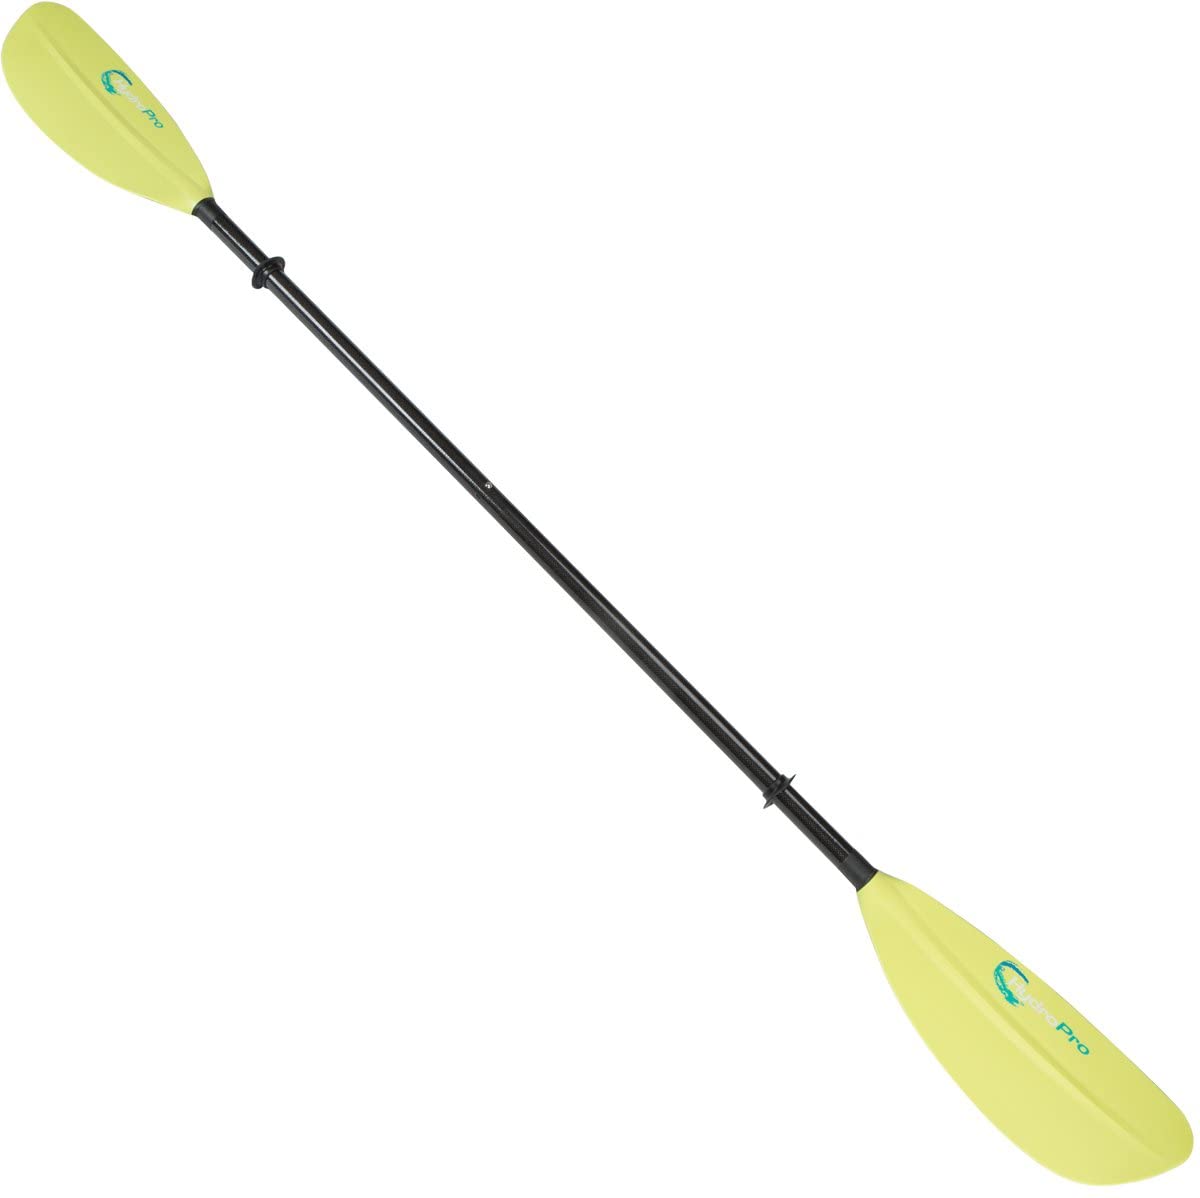 HydroPro 220 cm Carbon Fiber Kayak Paddle